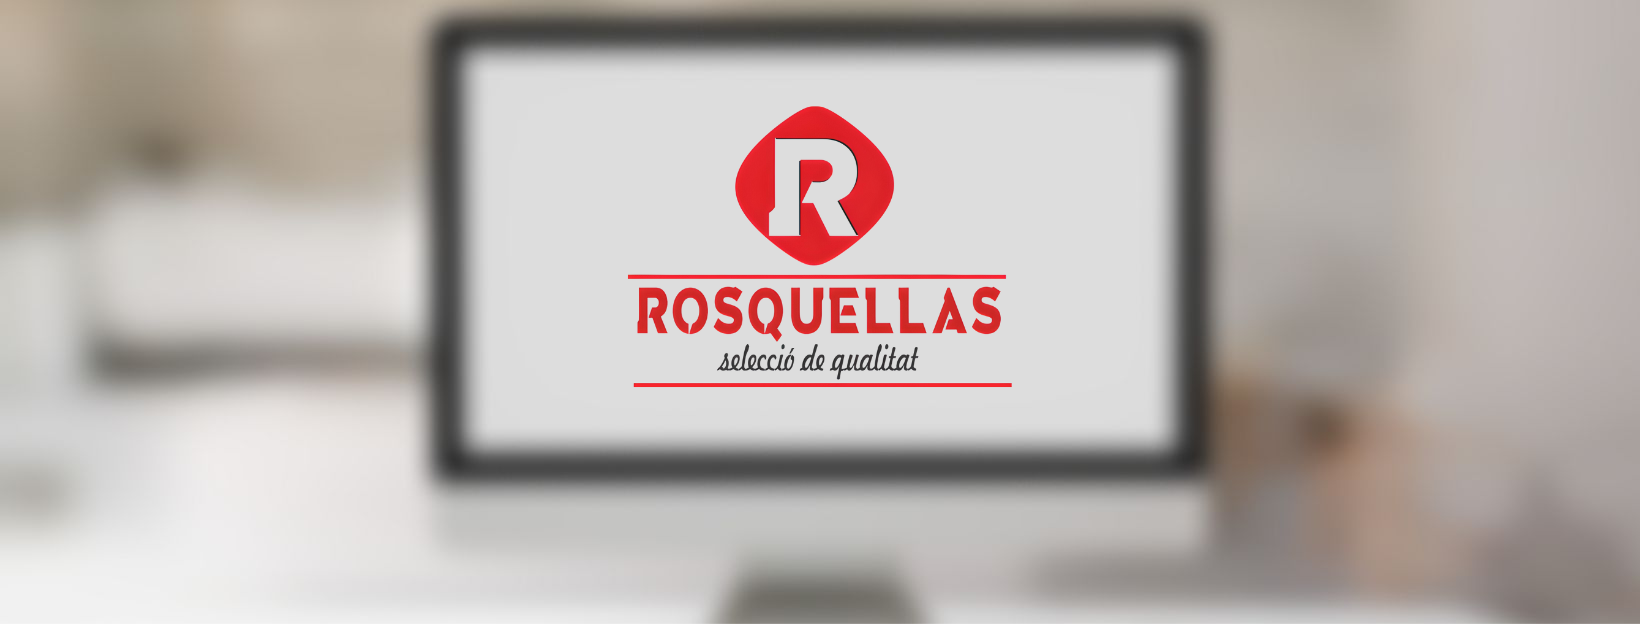 SEO for Comercial Lluis Rosquellas’ website